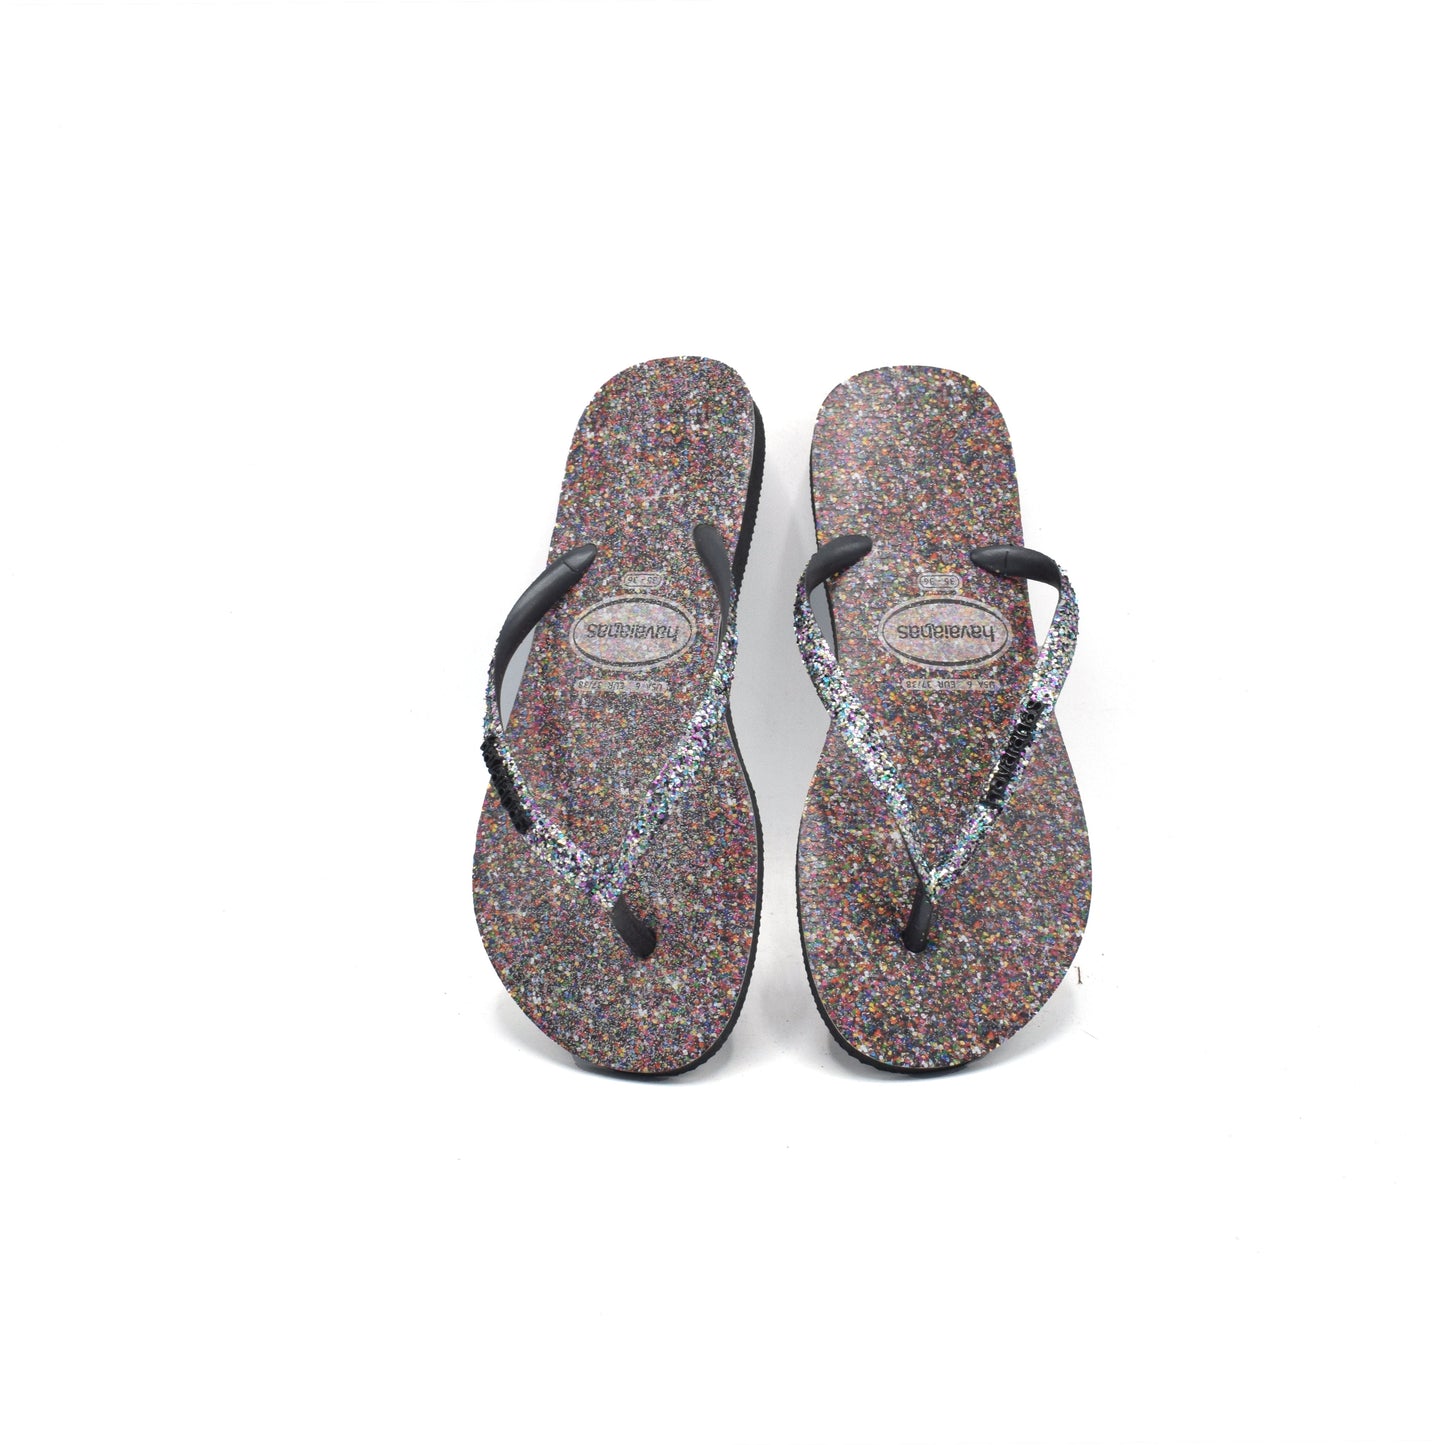 HAVAIANAS WOMENS slippers